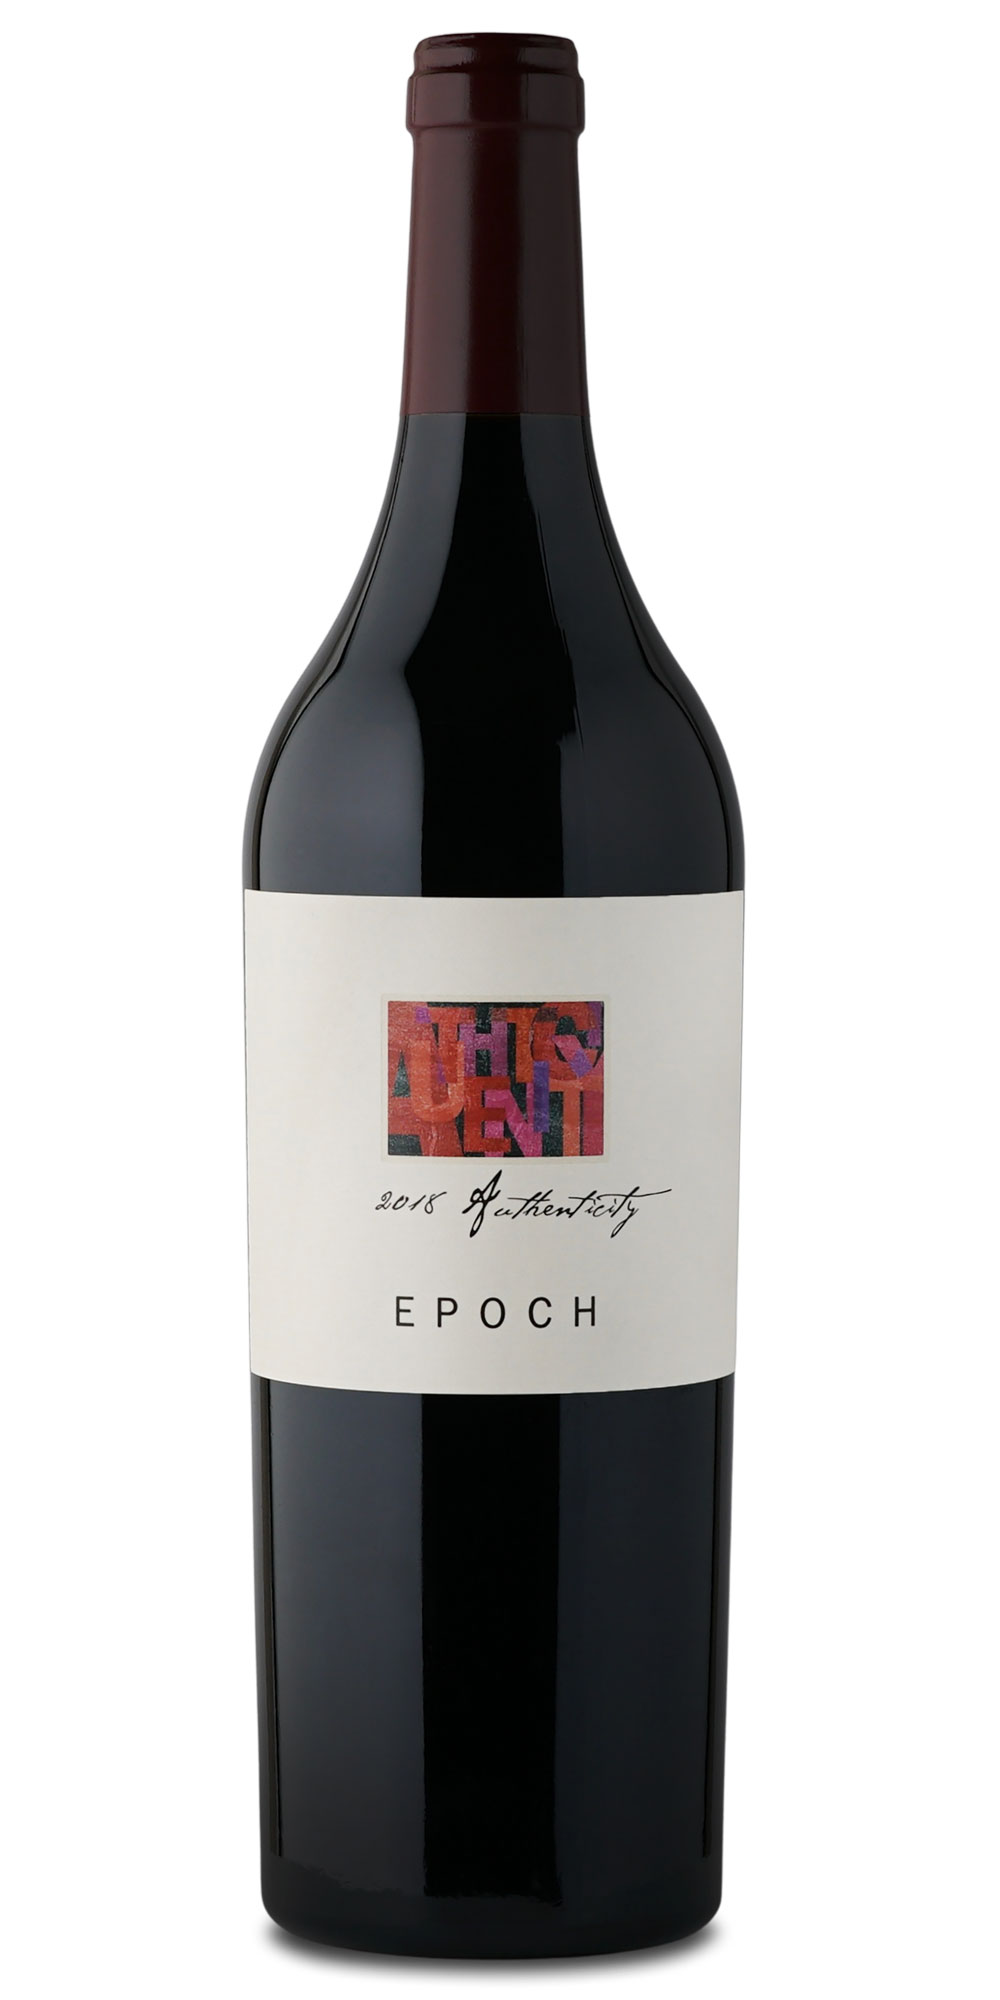 Authenticity - Epoch Estate Wines